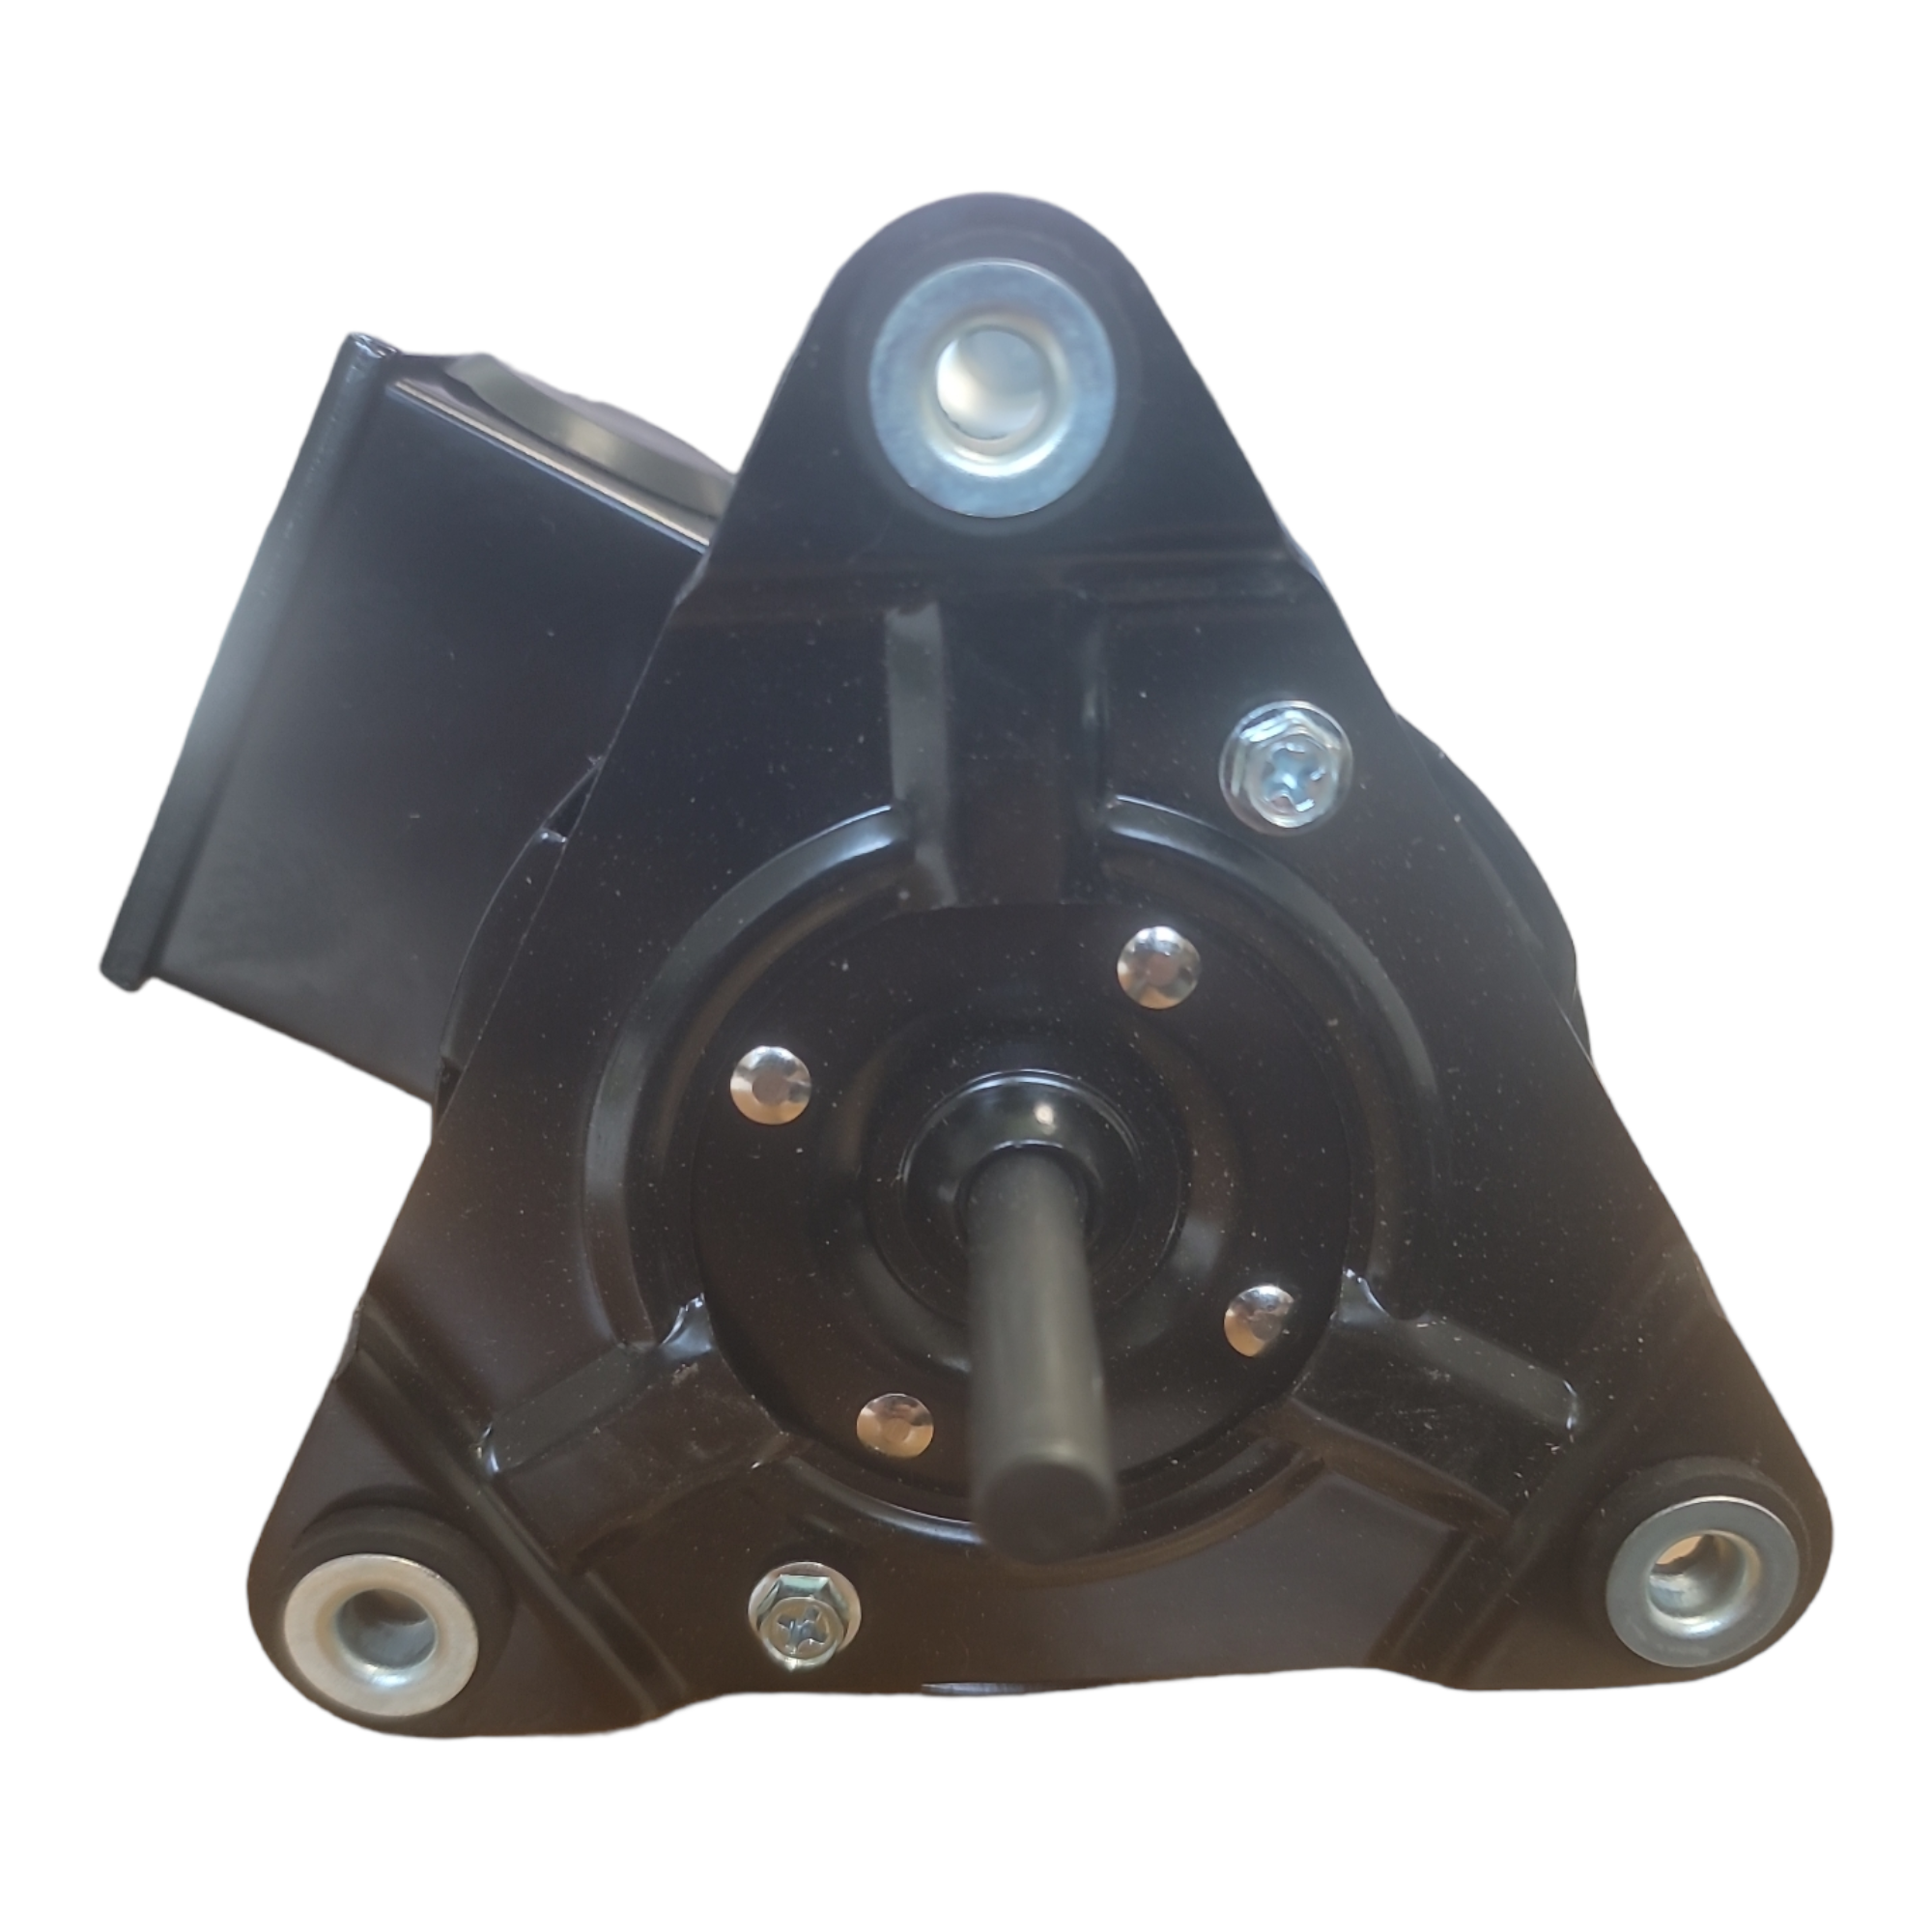 SS213 eMotorteK Replacement Motor for Rotom R213, 8214115068, Fasco D189